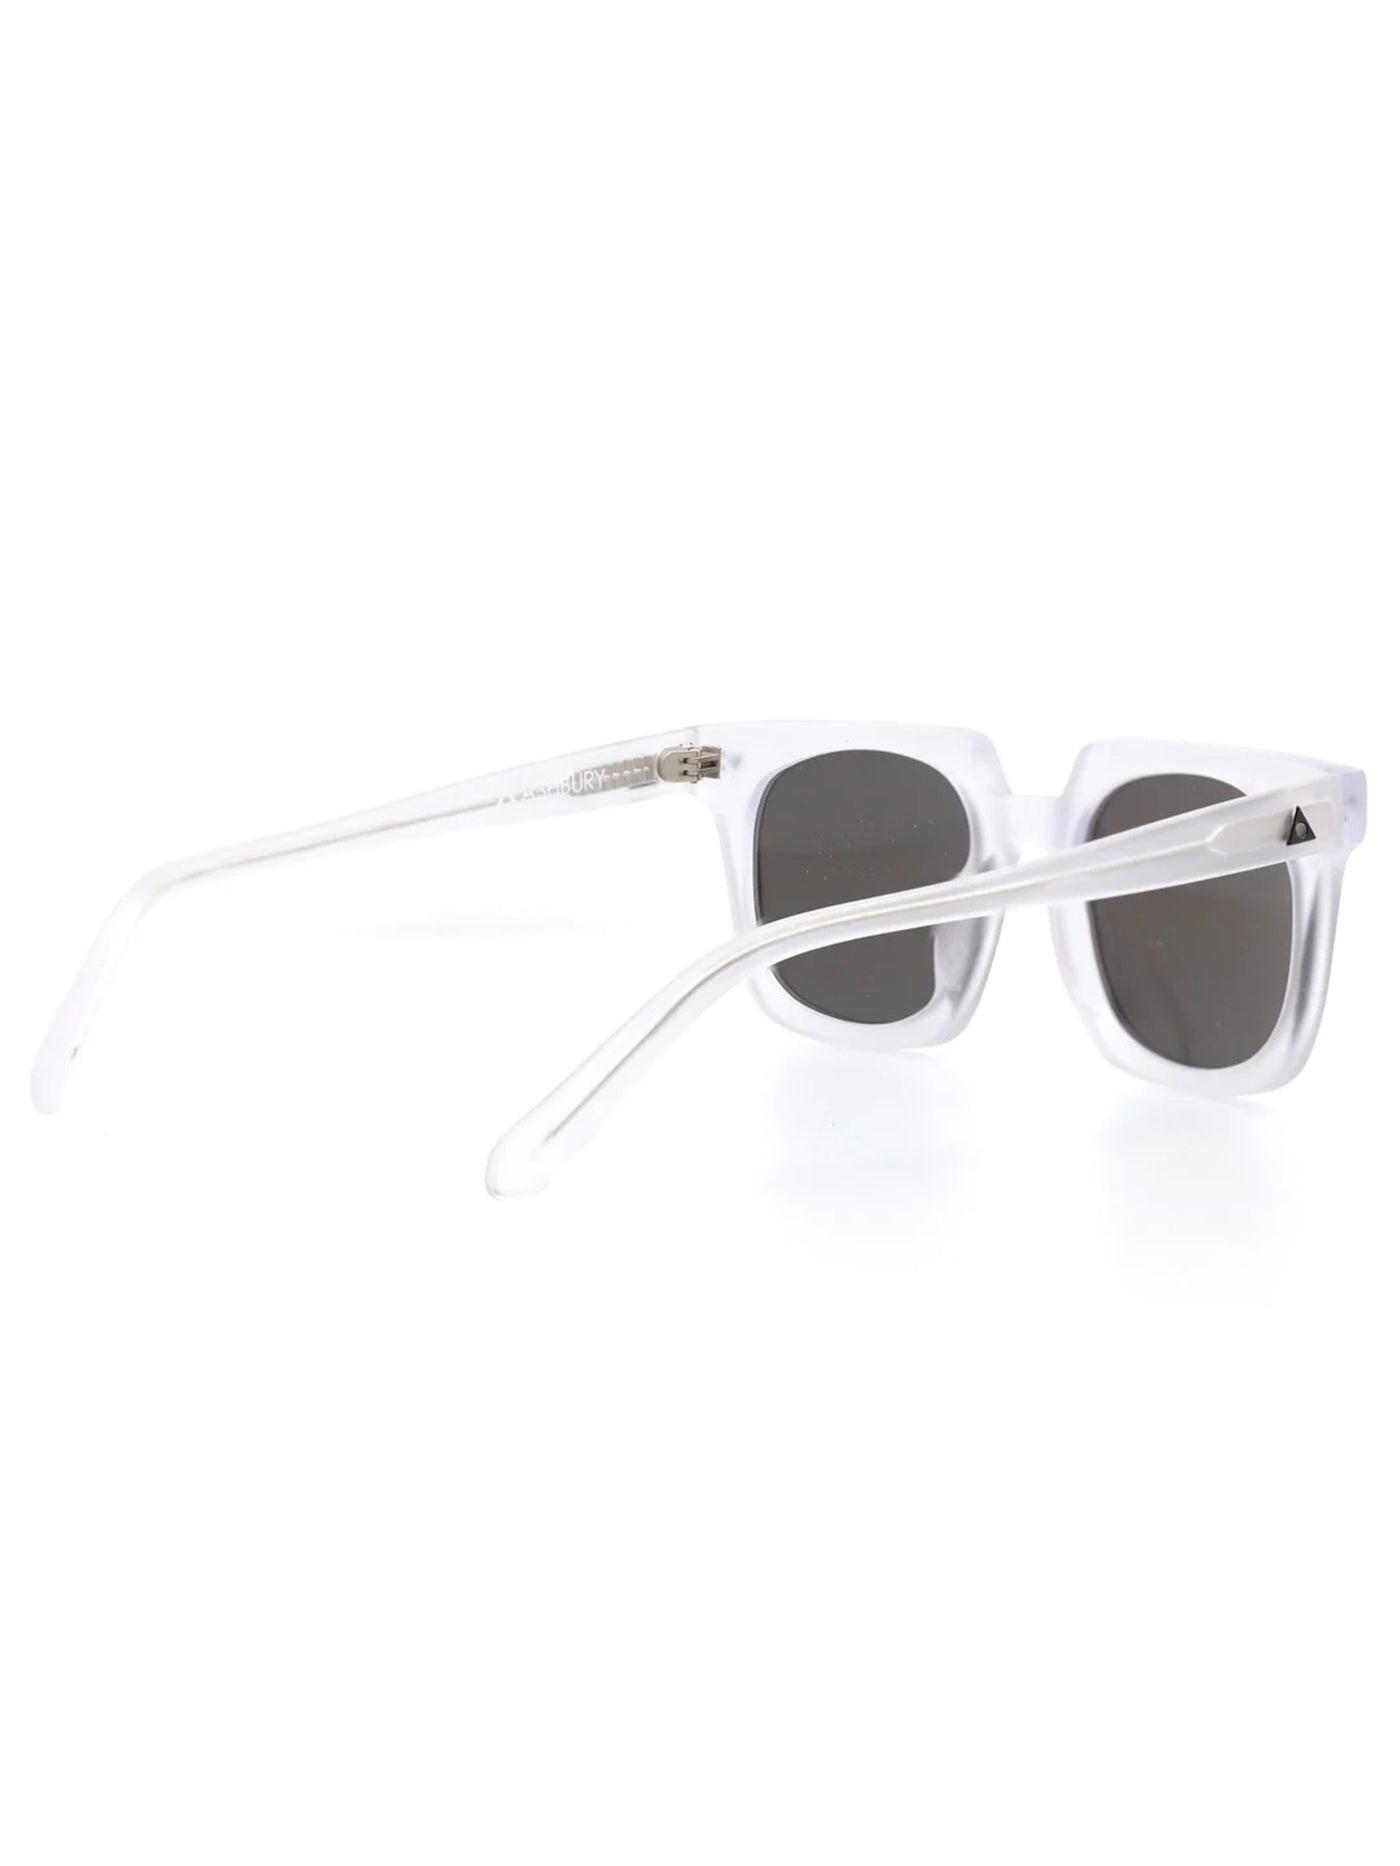 Ashbury Ace Sunglasses